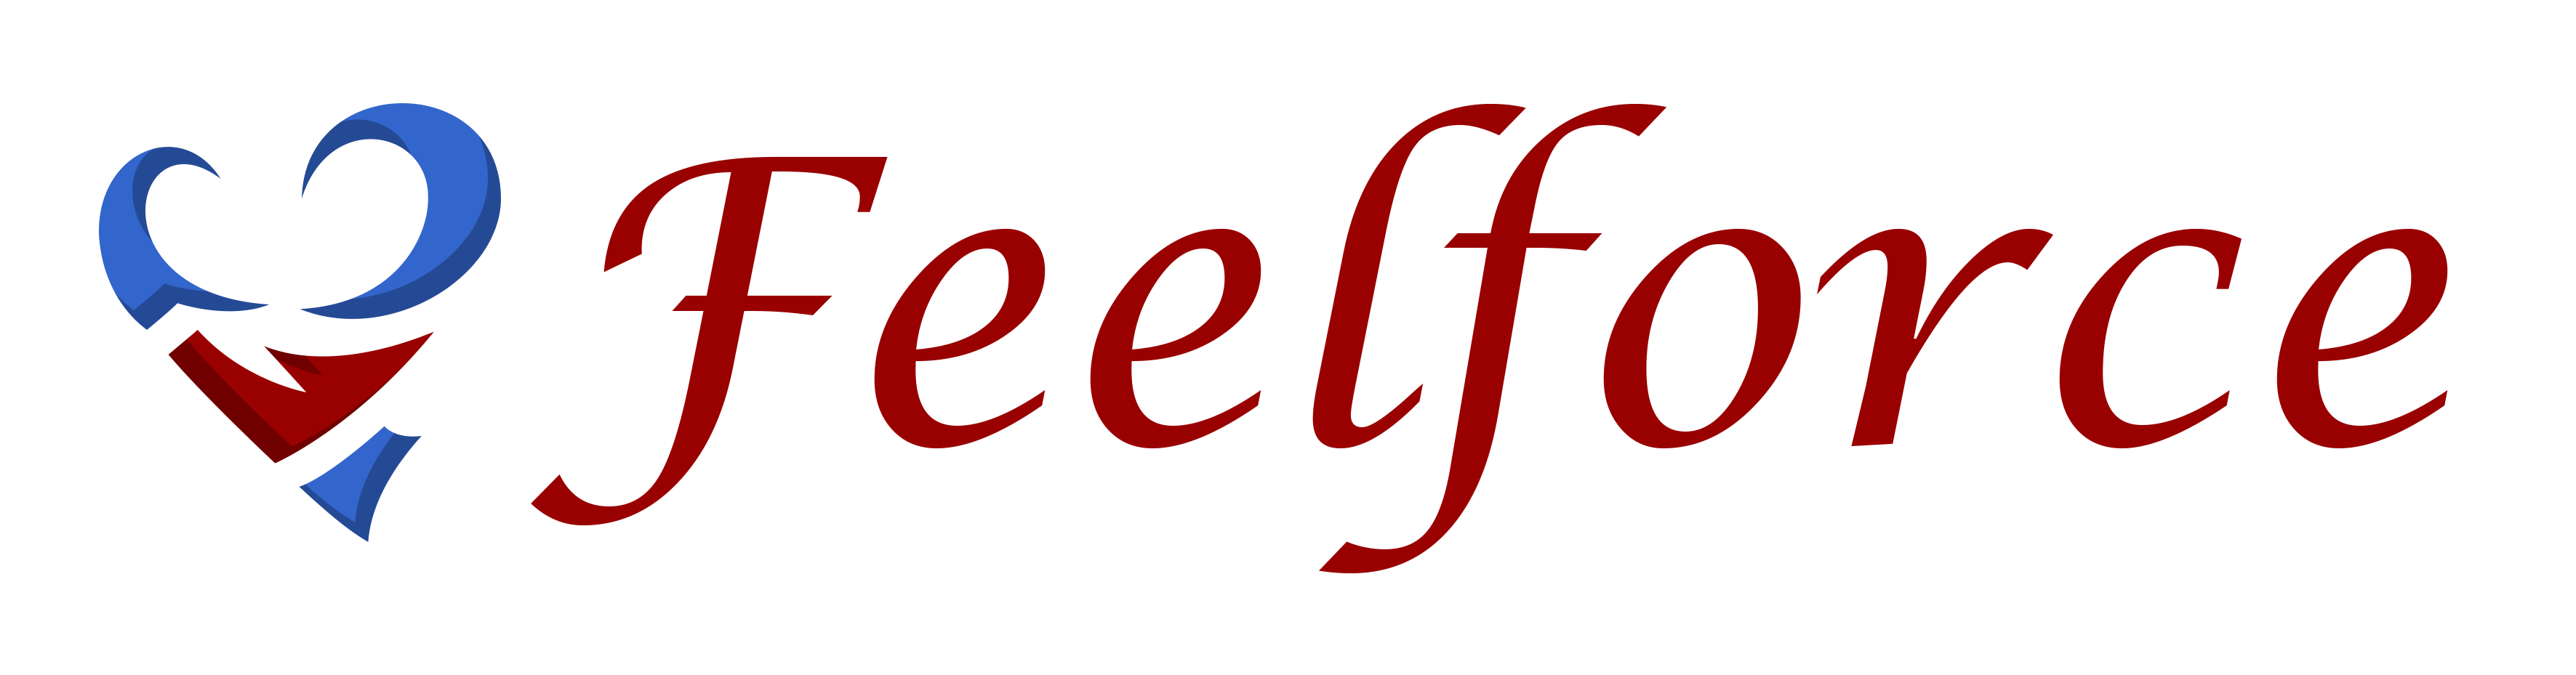 Feelforce